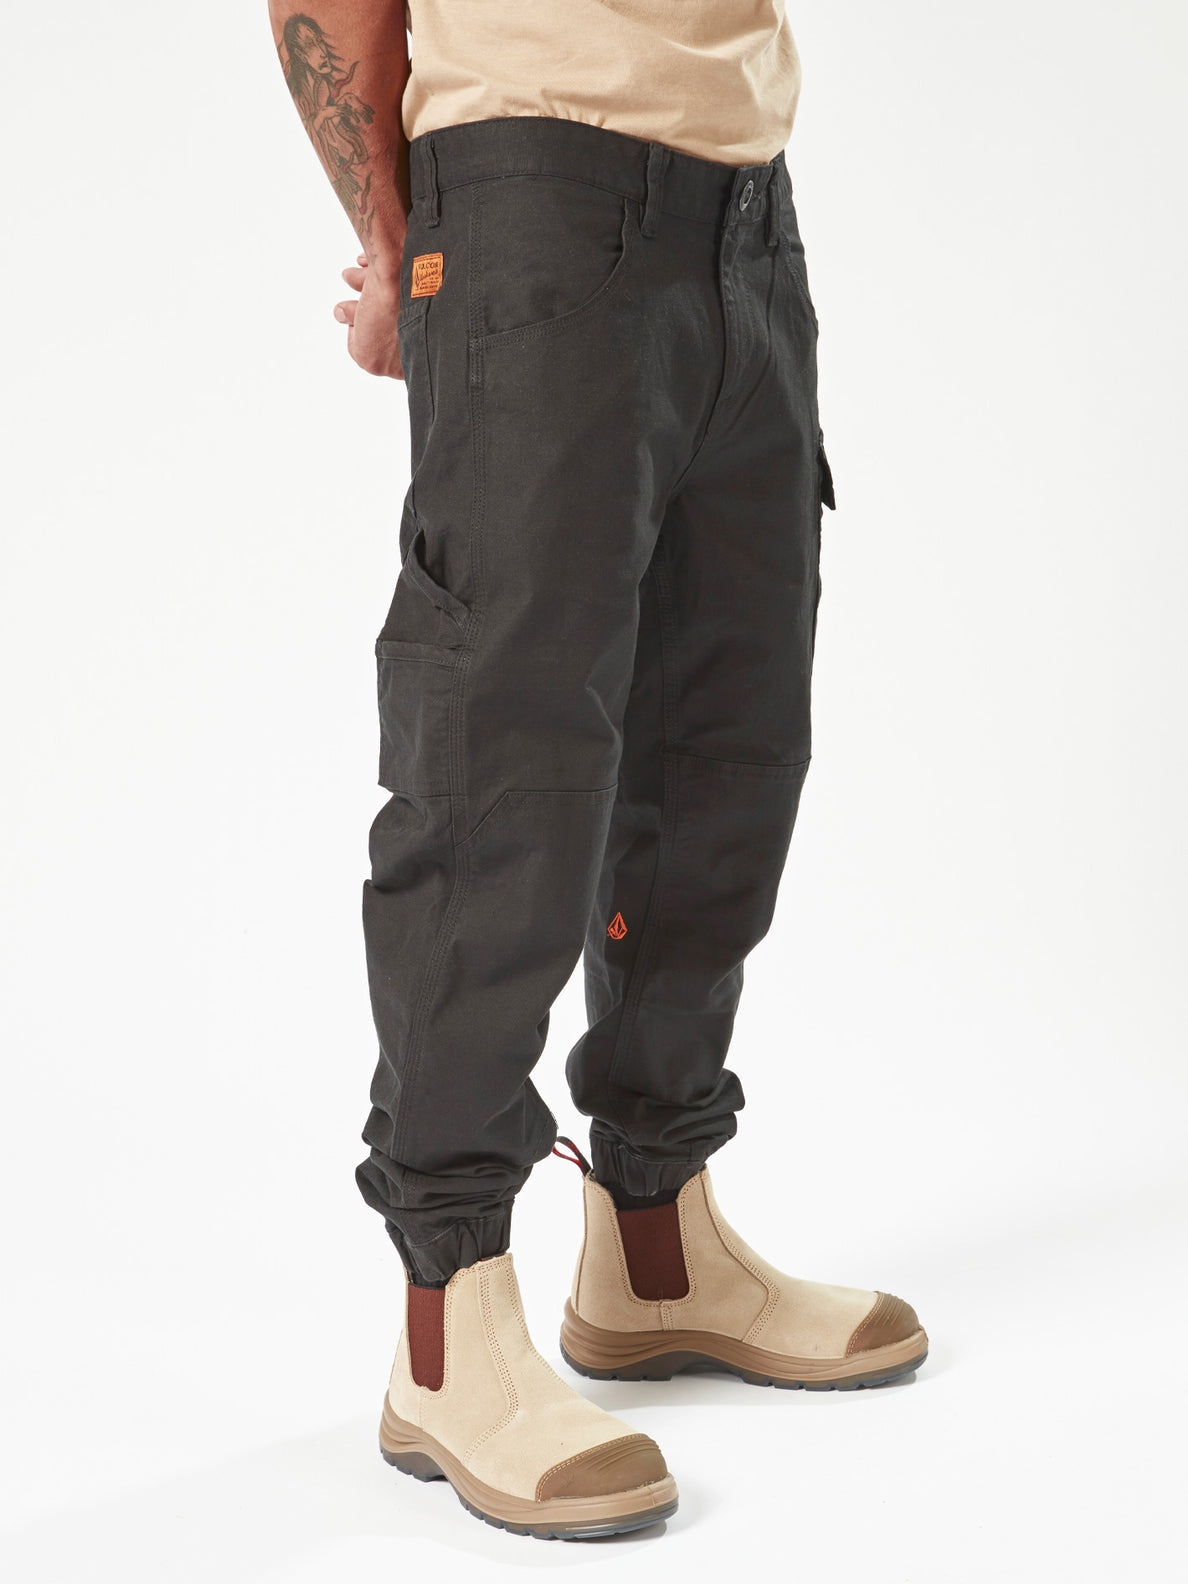 Volcom Workwear Caliper Cuffed Pants - Black